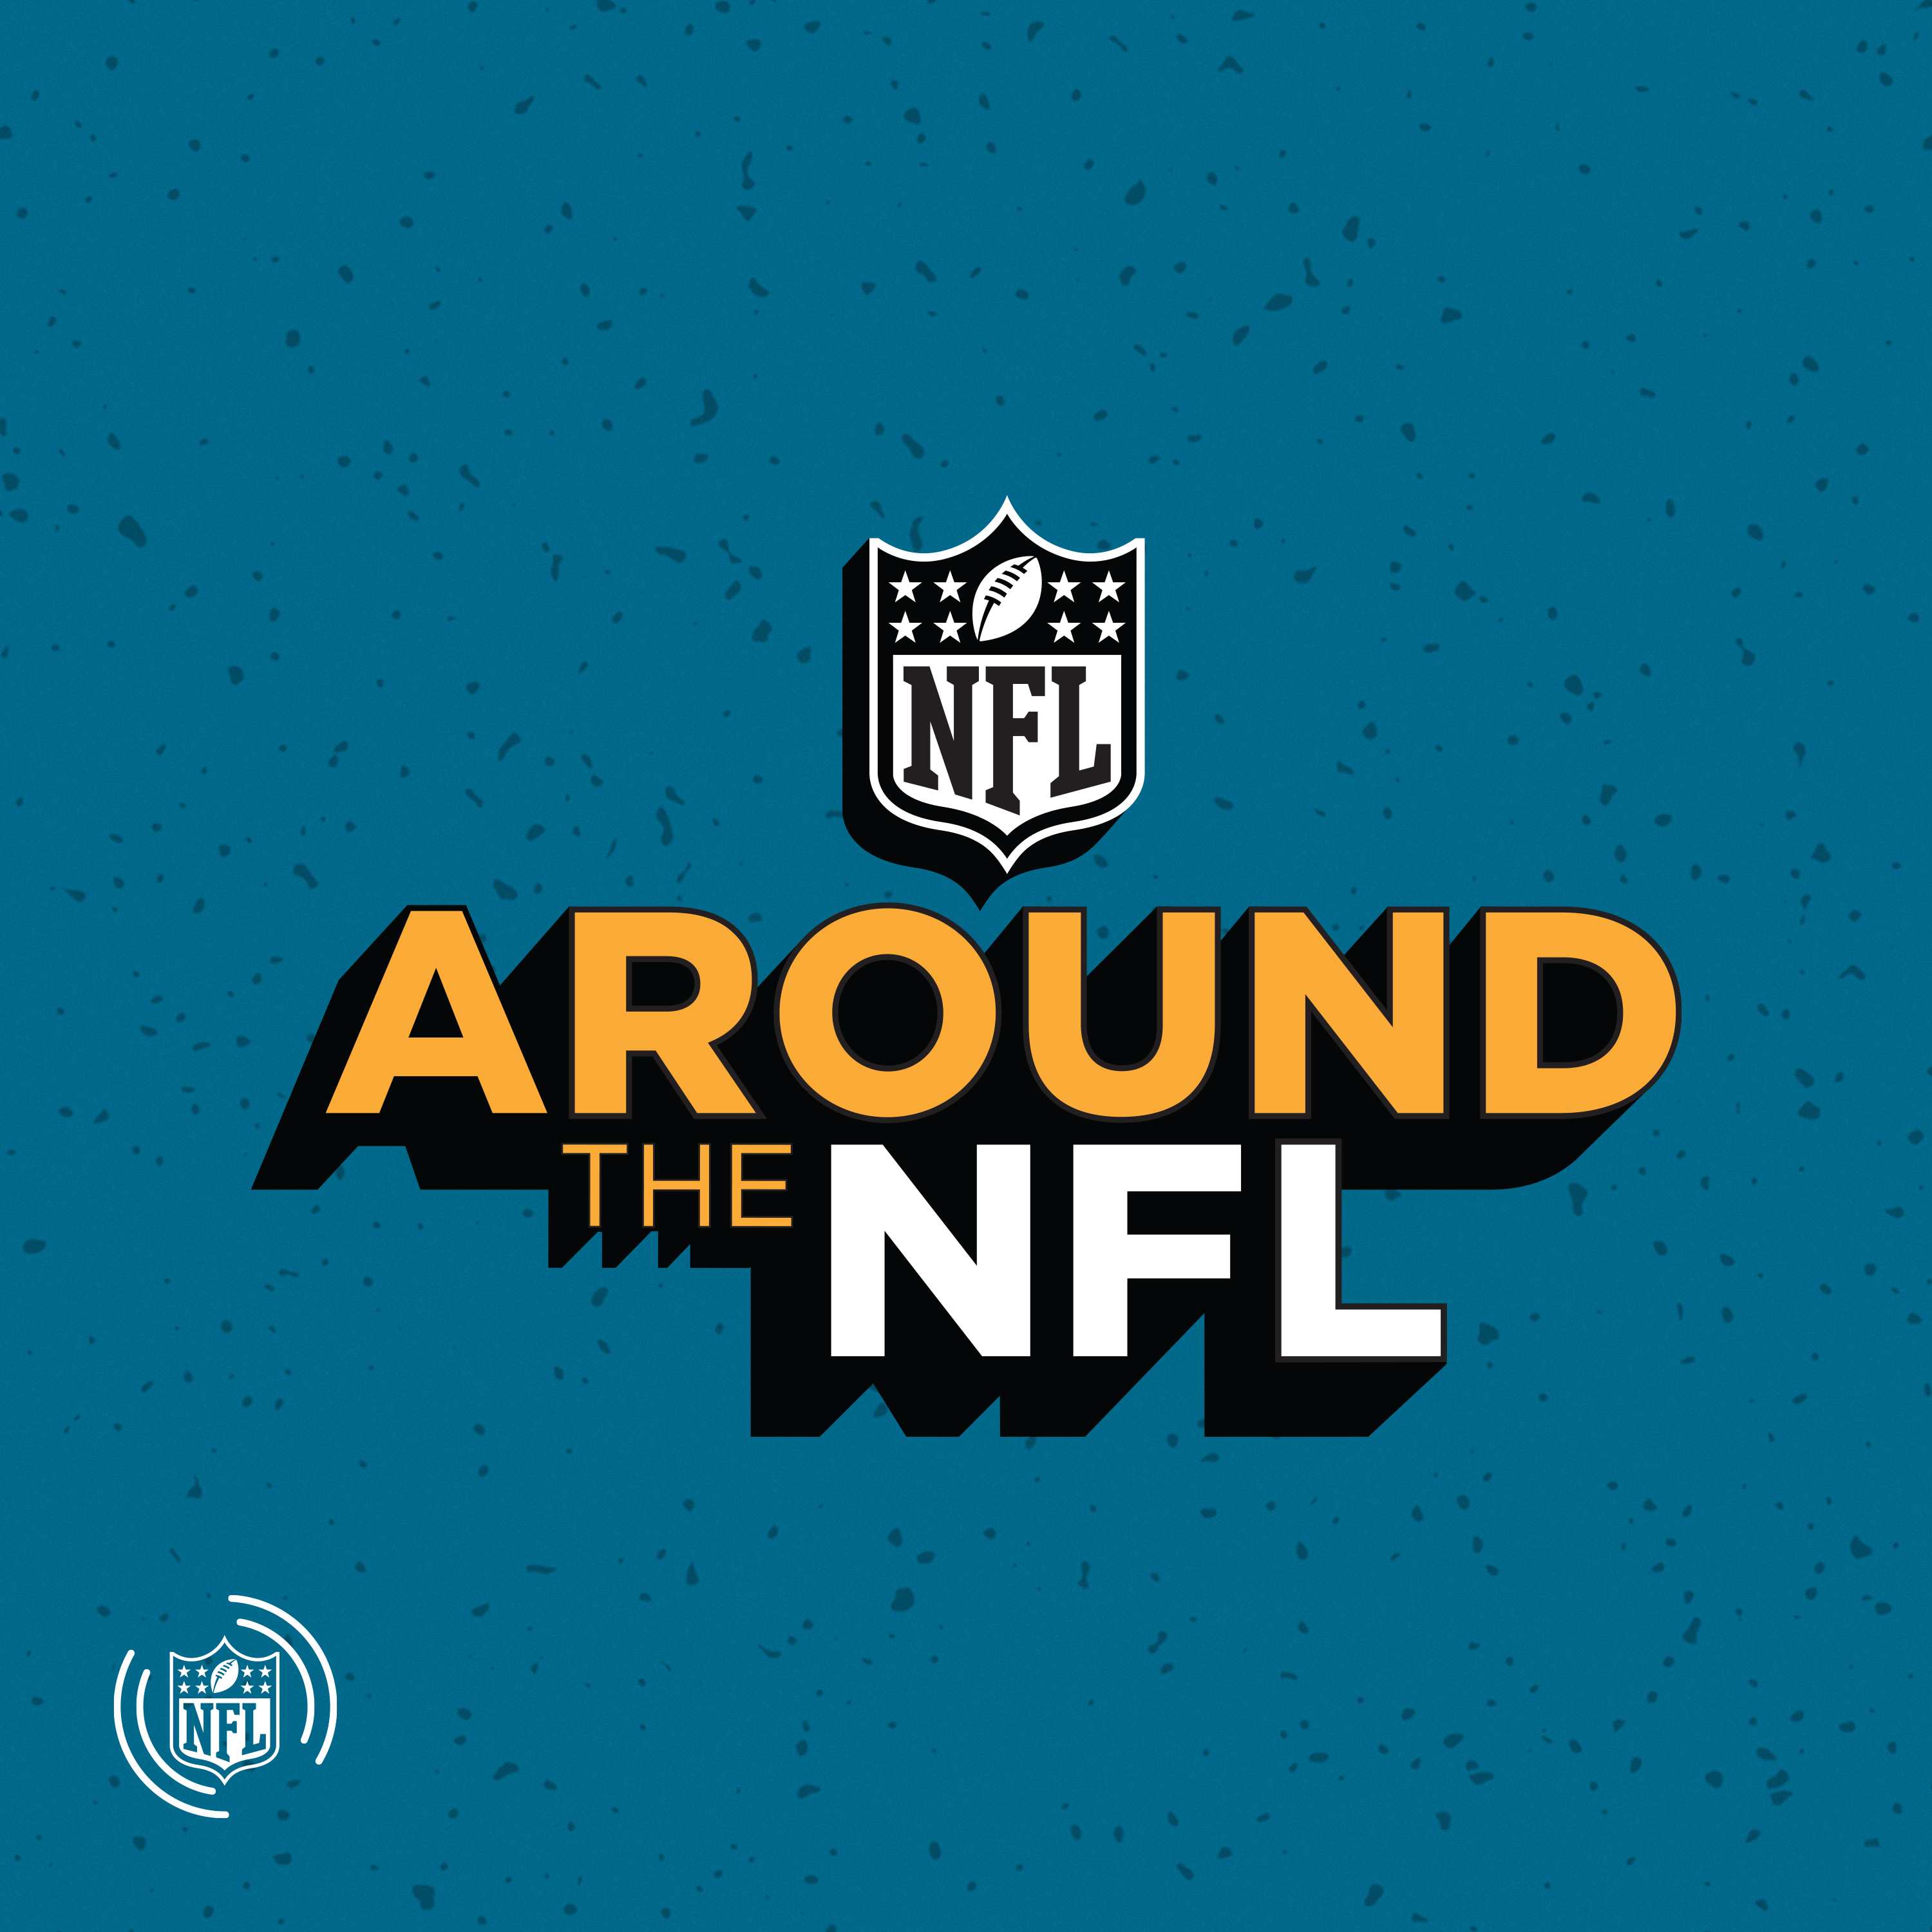 NFL ATL: Week 16 recap